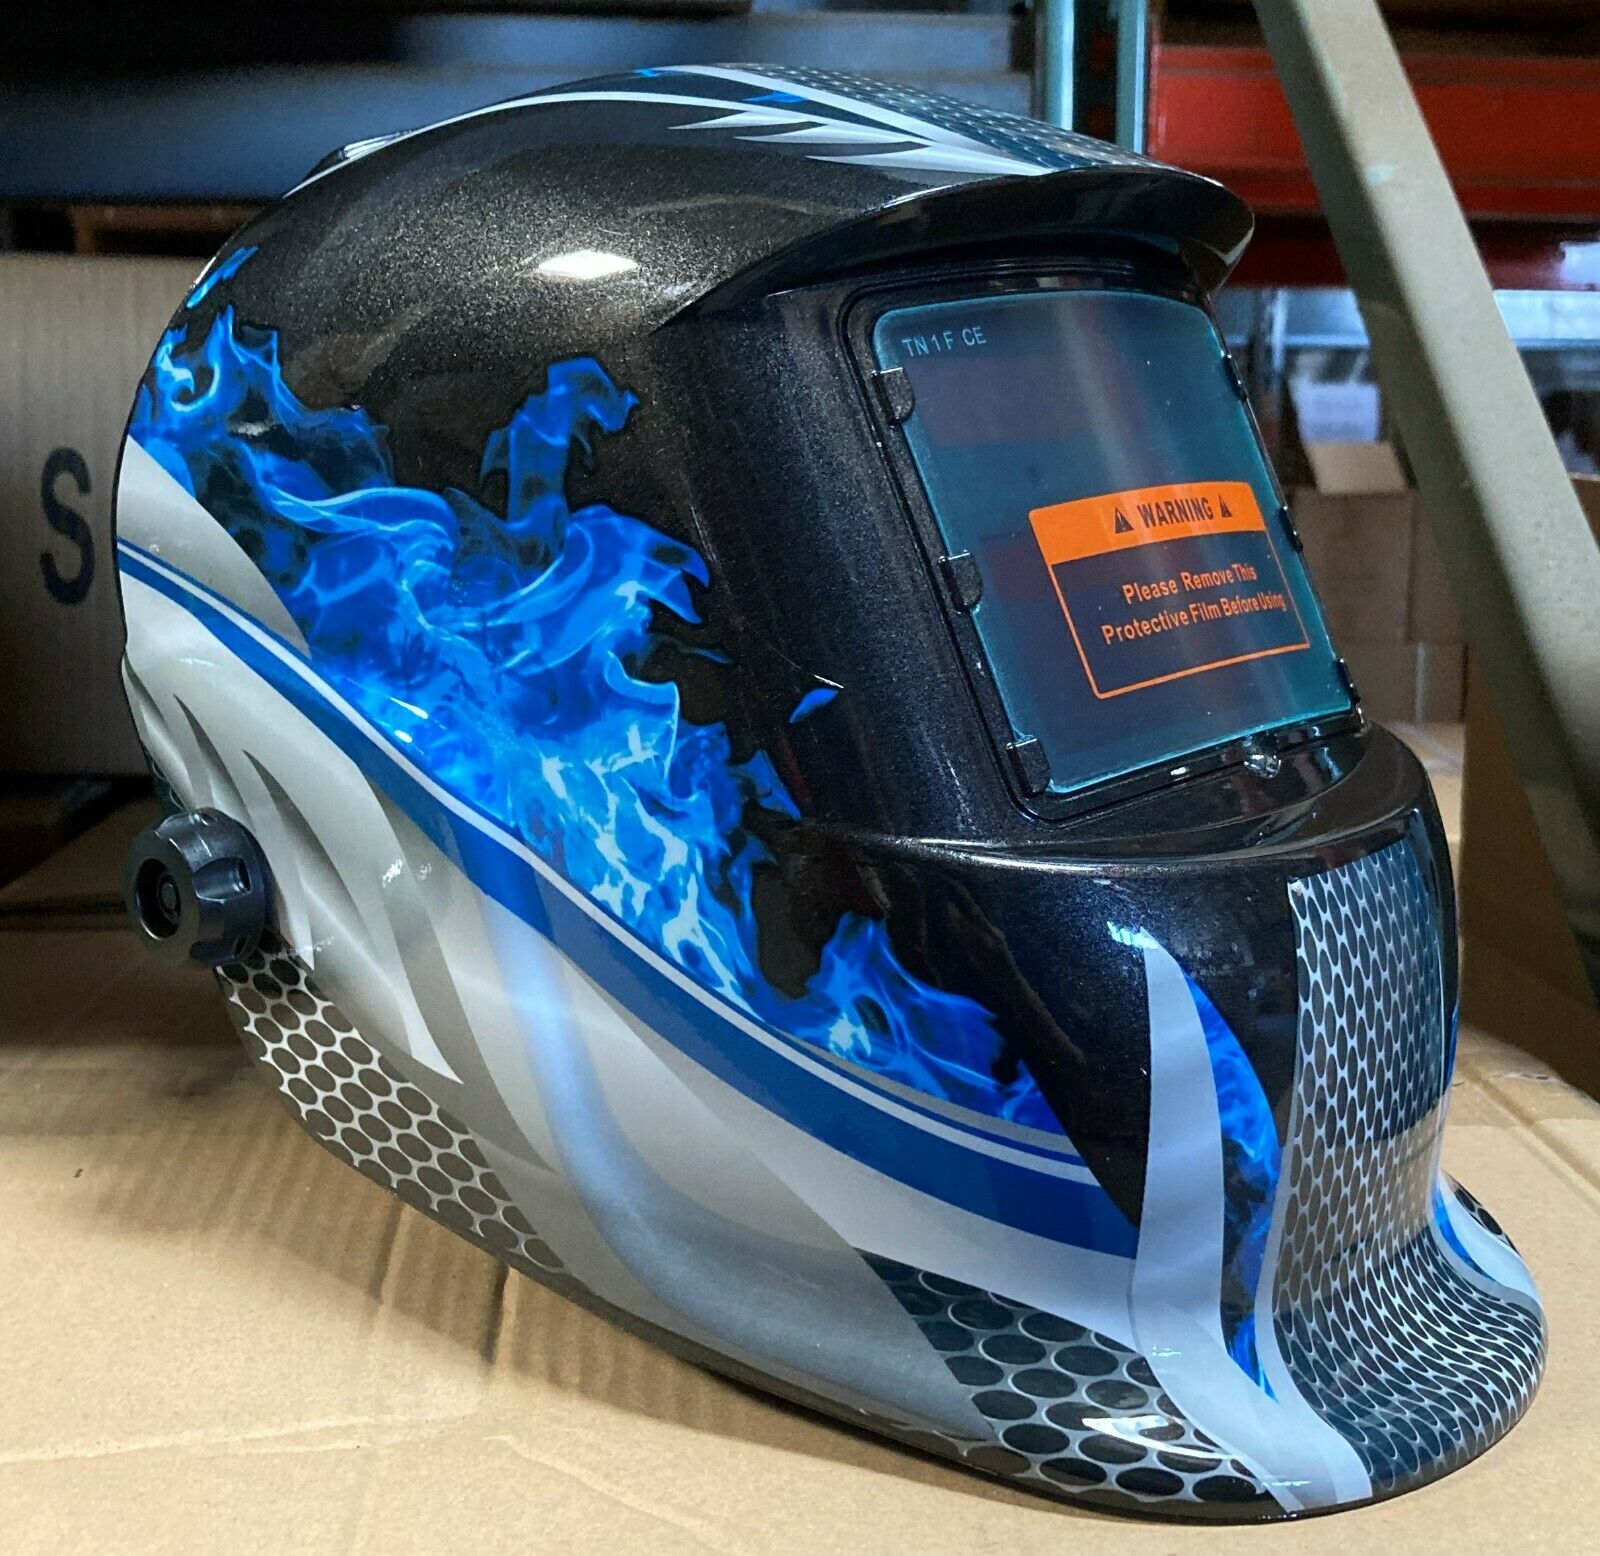 FMTT certified mask Auto Darkening Welding Helmet+Grinding